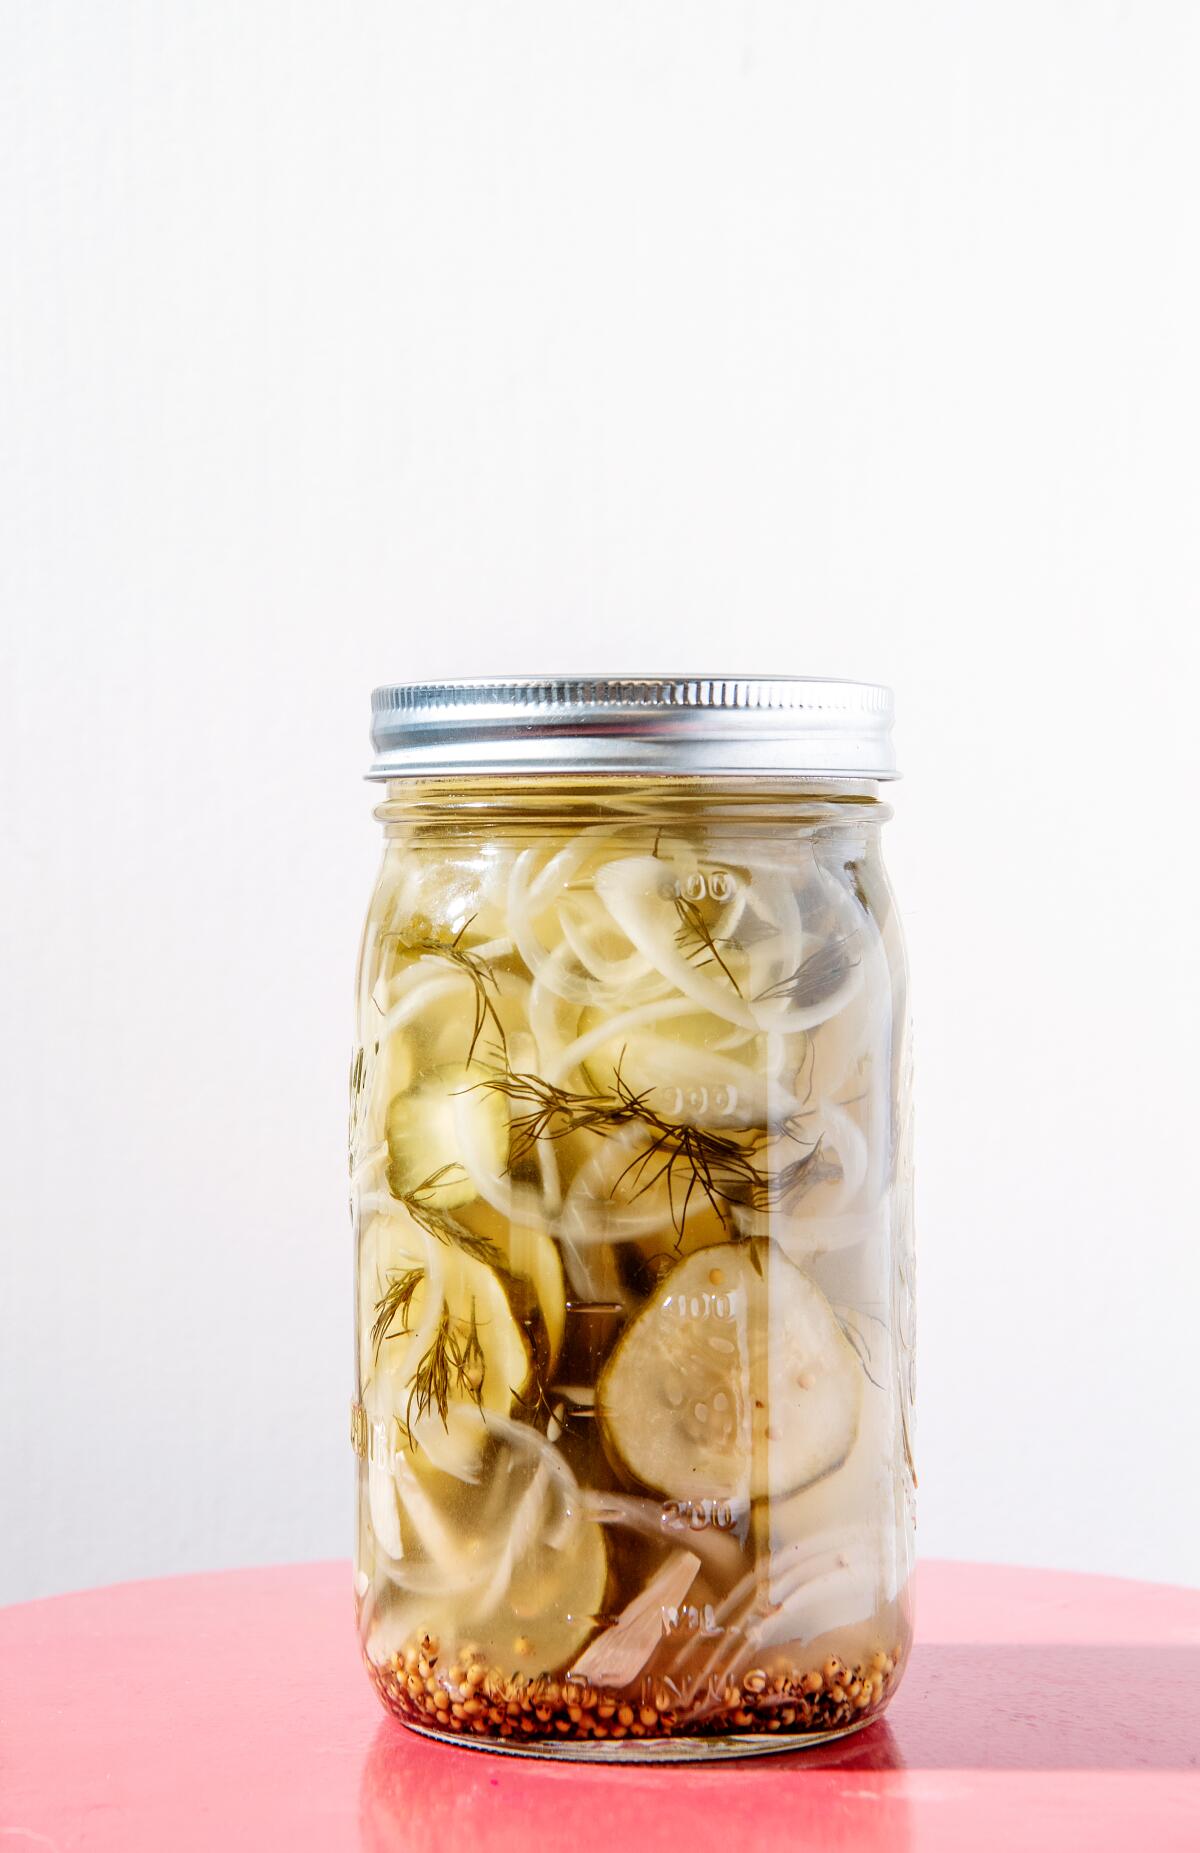 A jar of Jeremy Fox's kosher pickles 